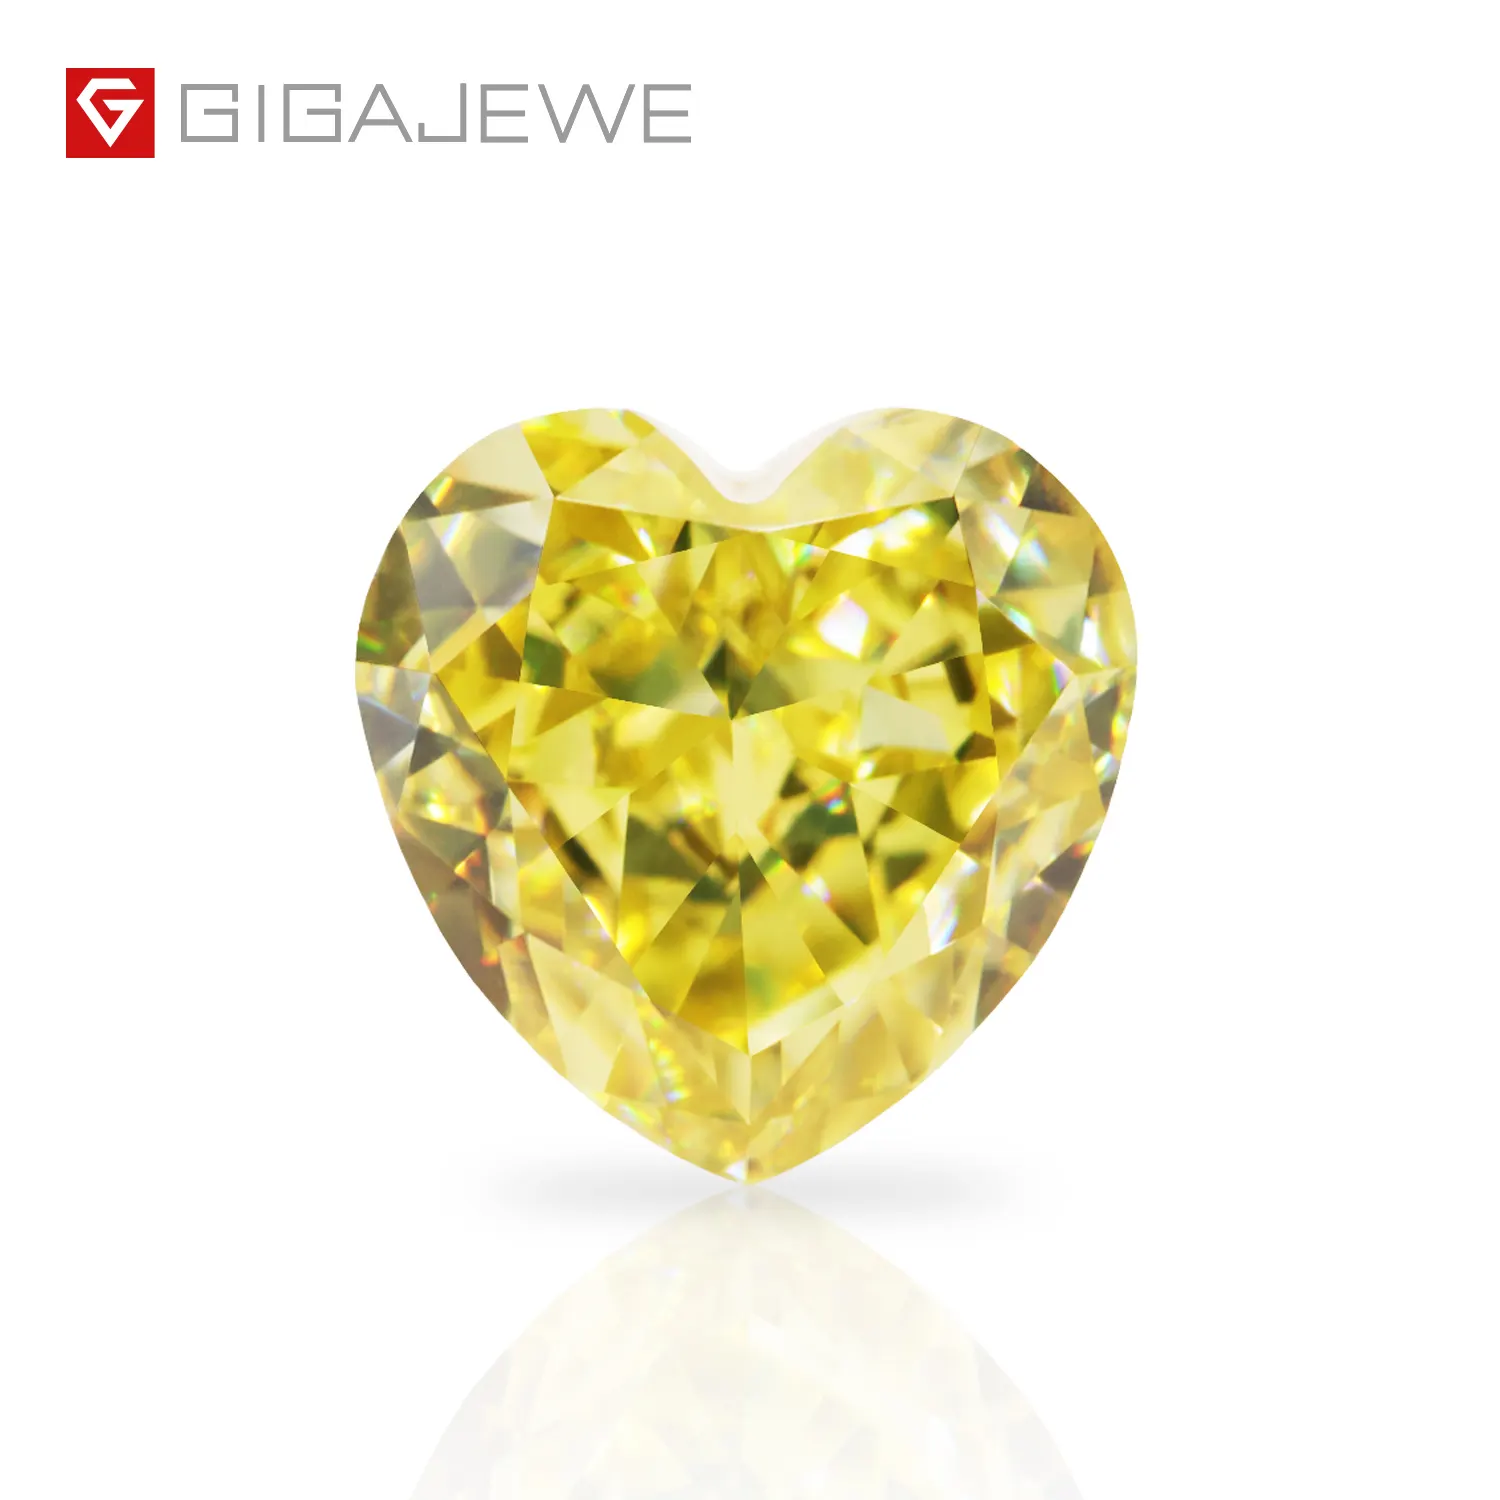 GIGAJEWE Customized Crushed Ice Heart Cut VVS1 Loose Diamond Test Passed Gemstone Vivid Yellow Moissanite